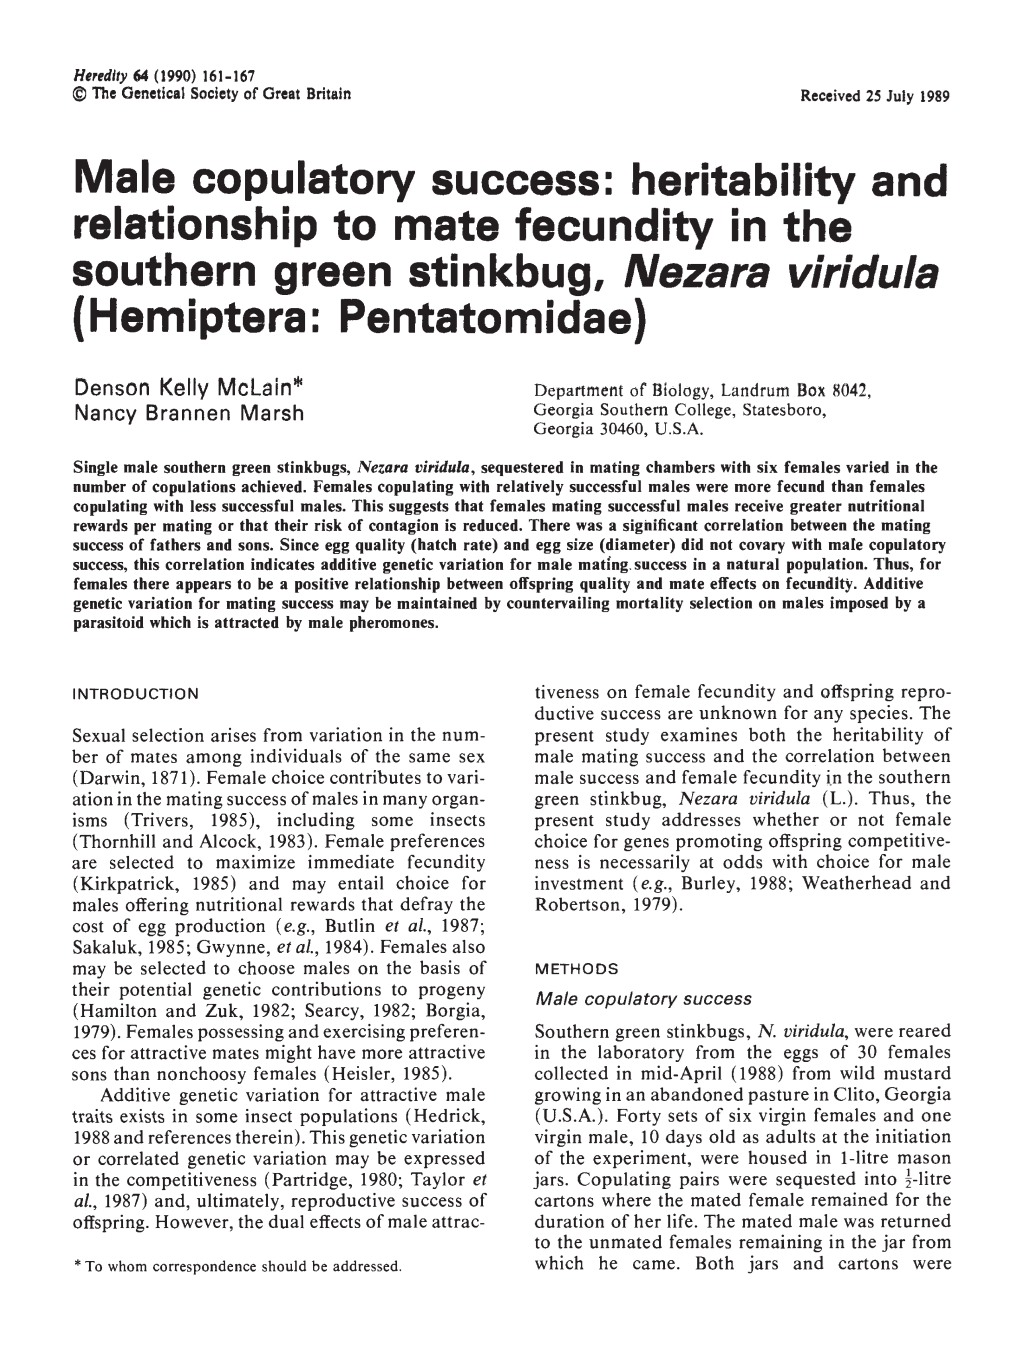 Relationship to Mate Fecundity in the Southern Green Stinkbug, Nezaraviridula (Hemiptera: Pentatomidae)